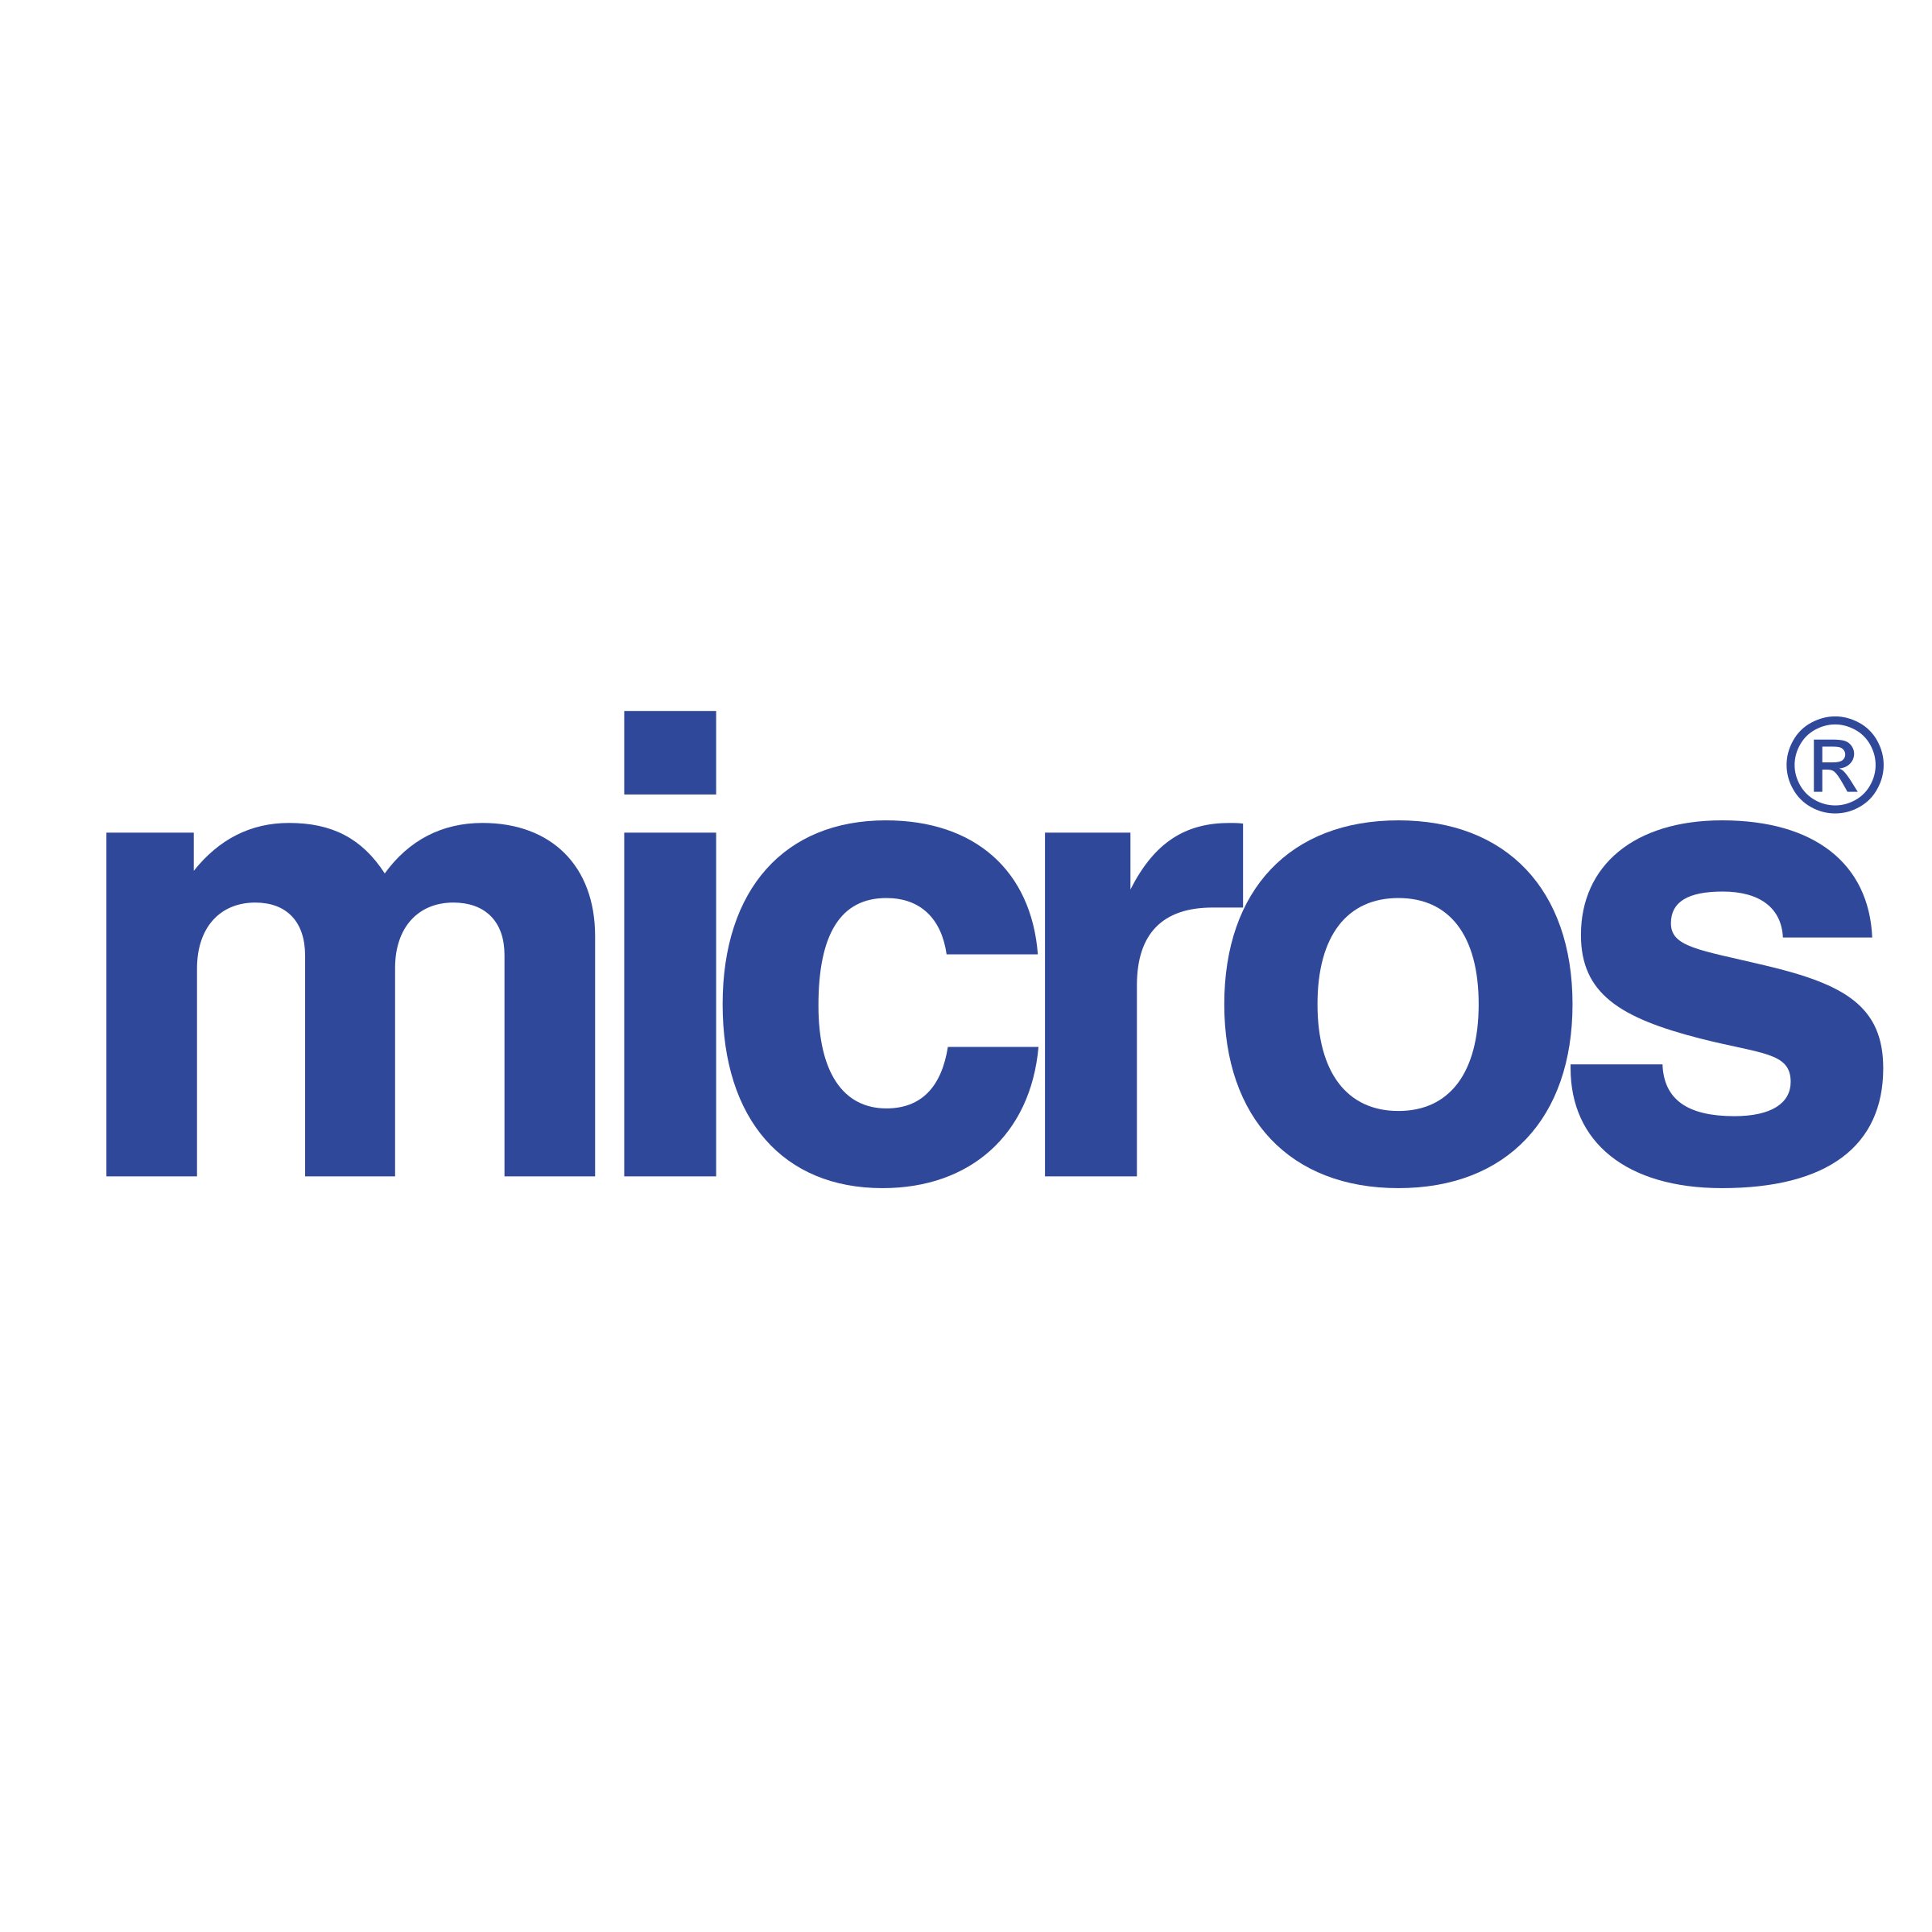 micros-logo-png-transparent.png